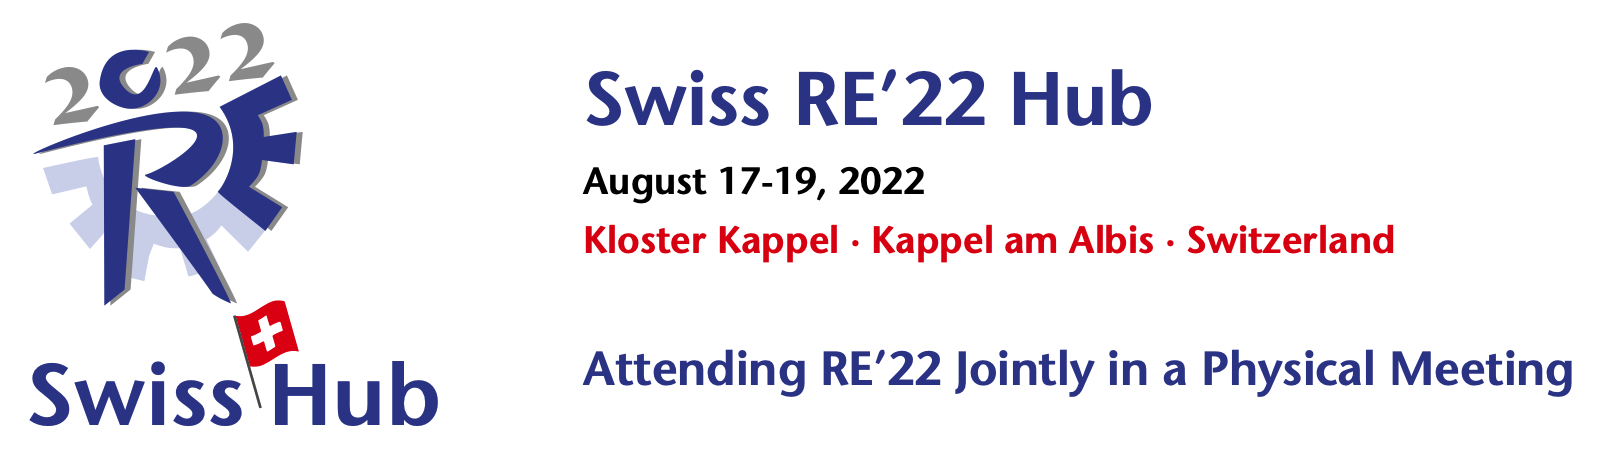 Swiss RE'22 Hub Banner